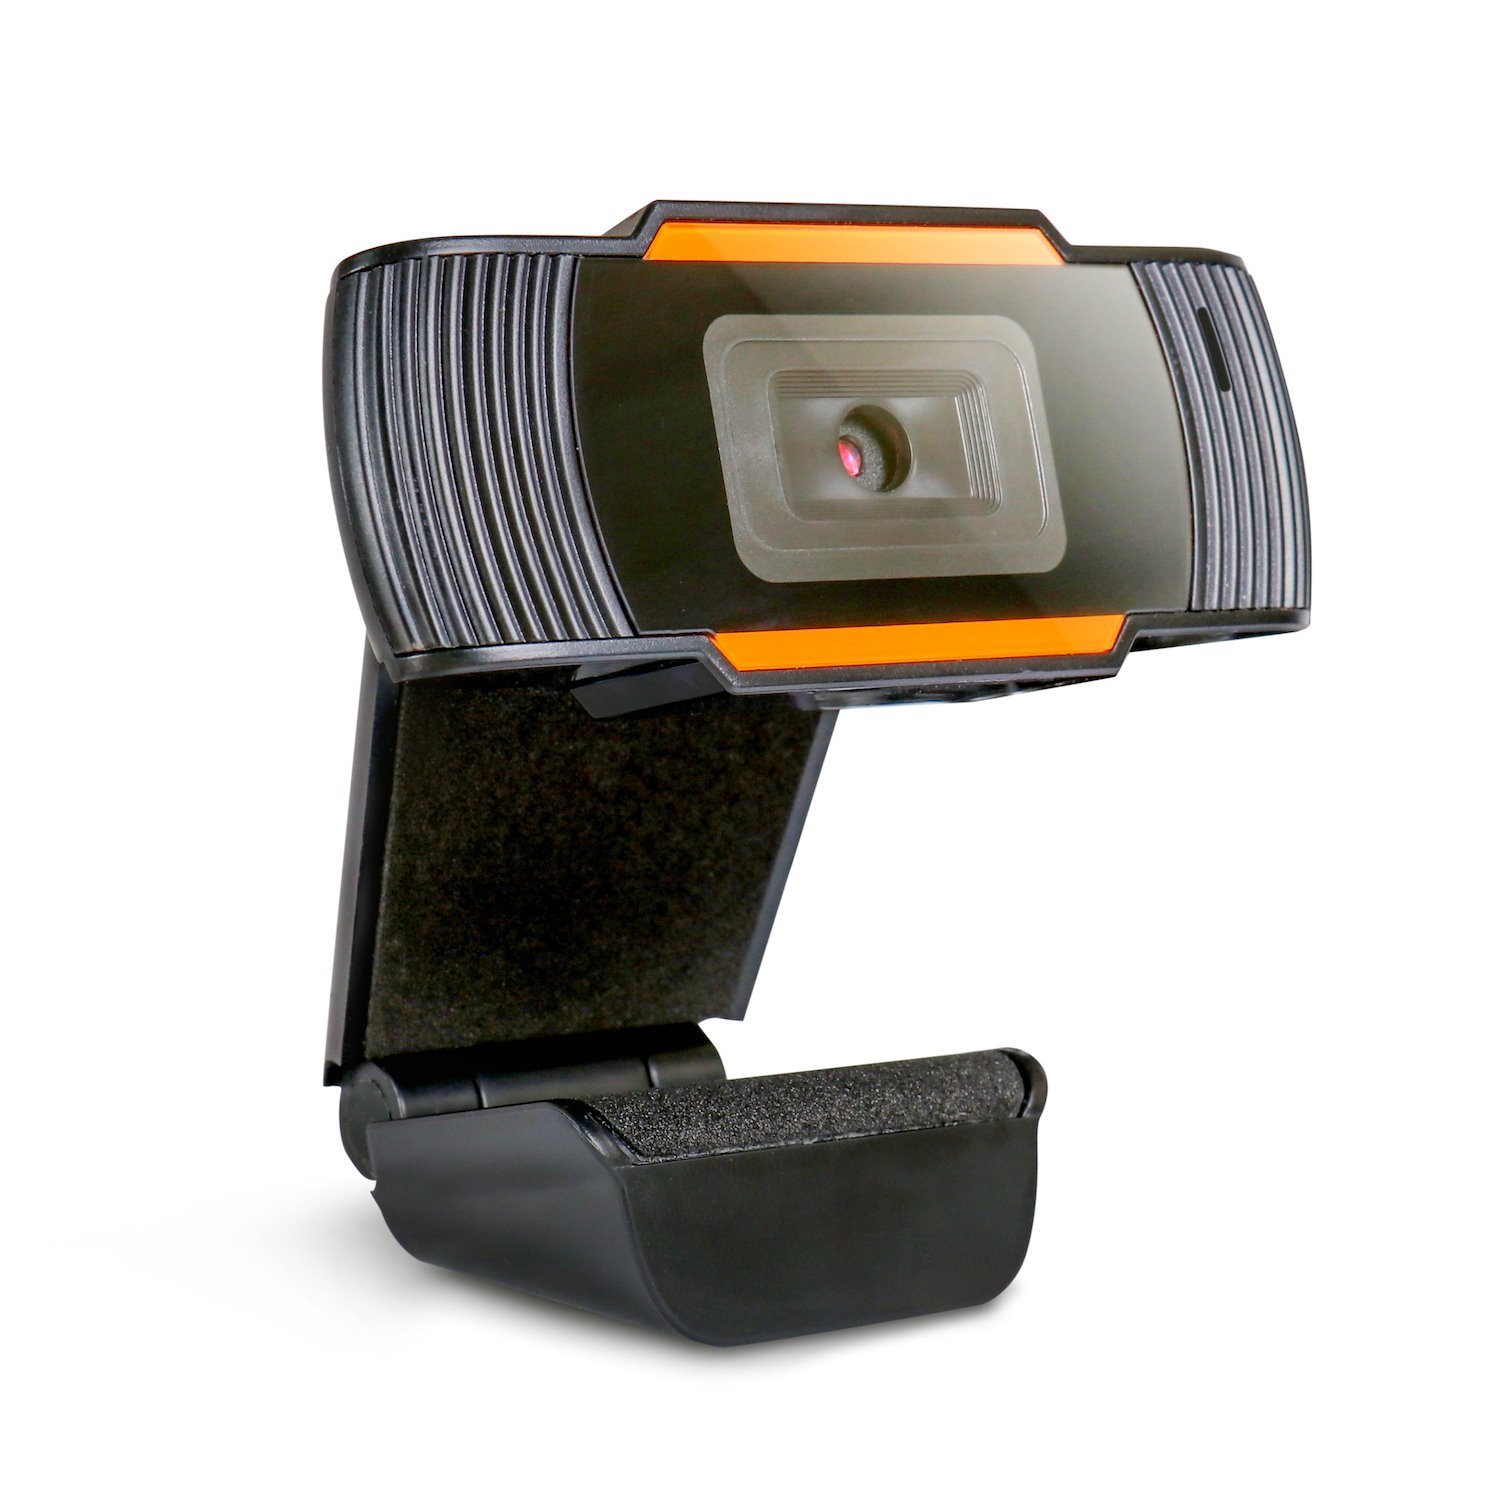 Edis Ec83 Webcam 1920 X 1080 Pixels Usb 2.0 Black Orange (Edis 1080P Full HD Webcam)